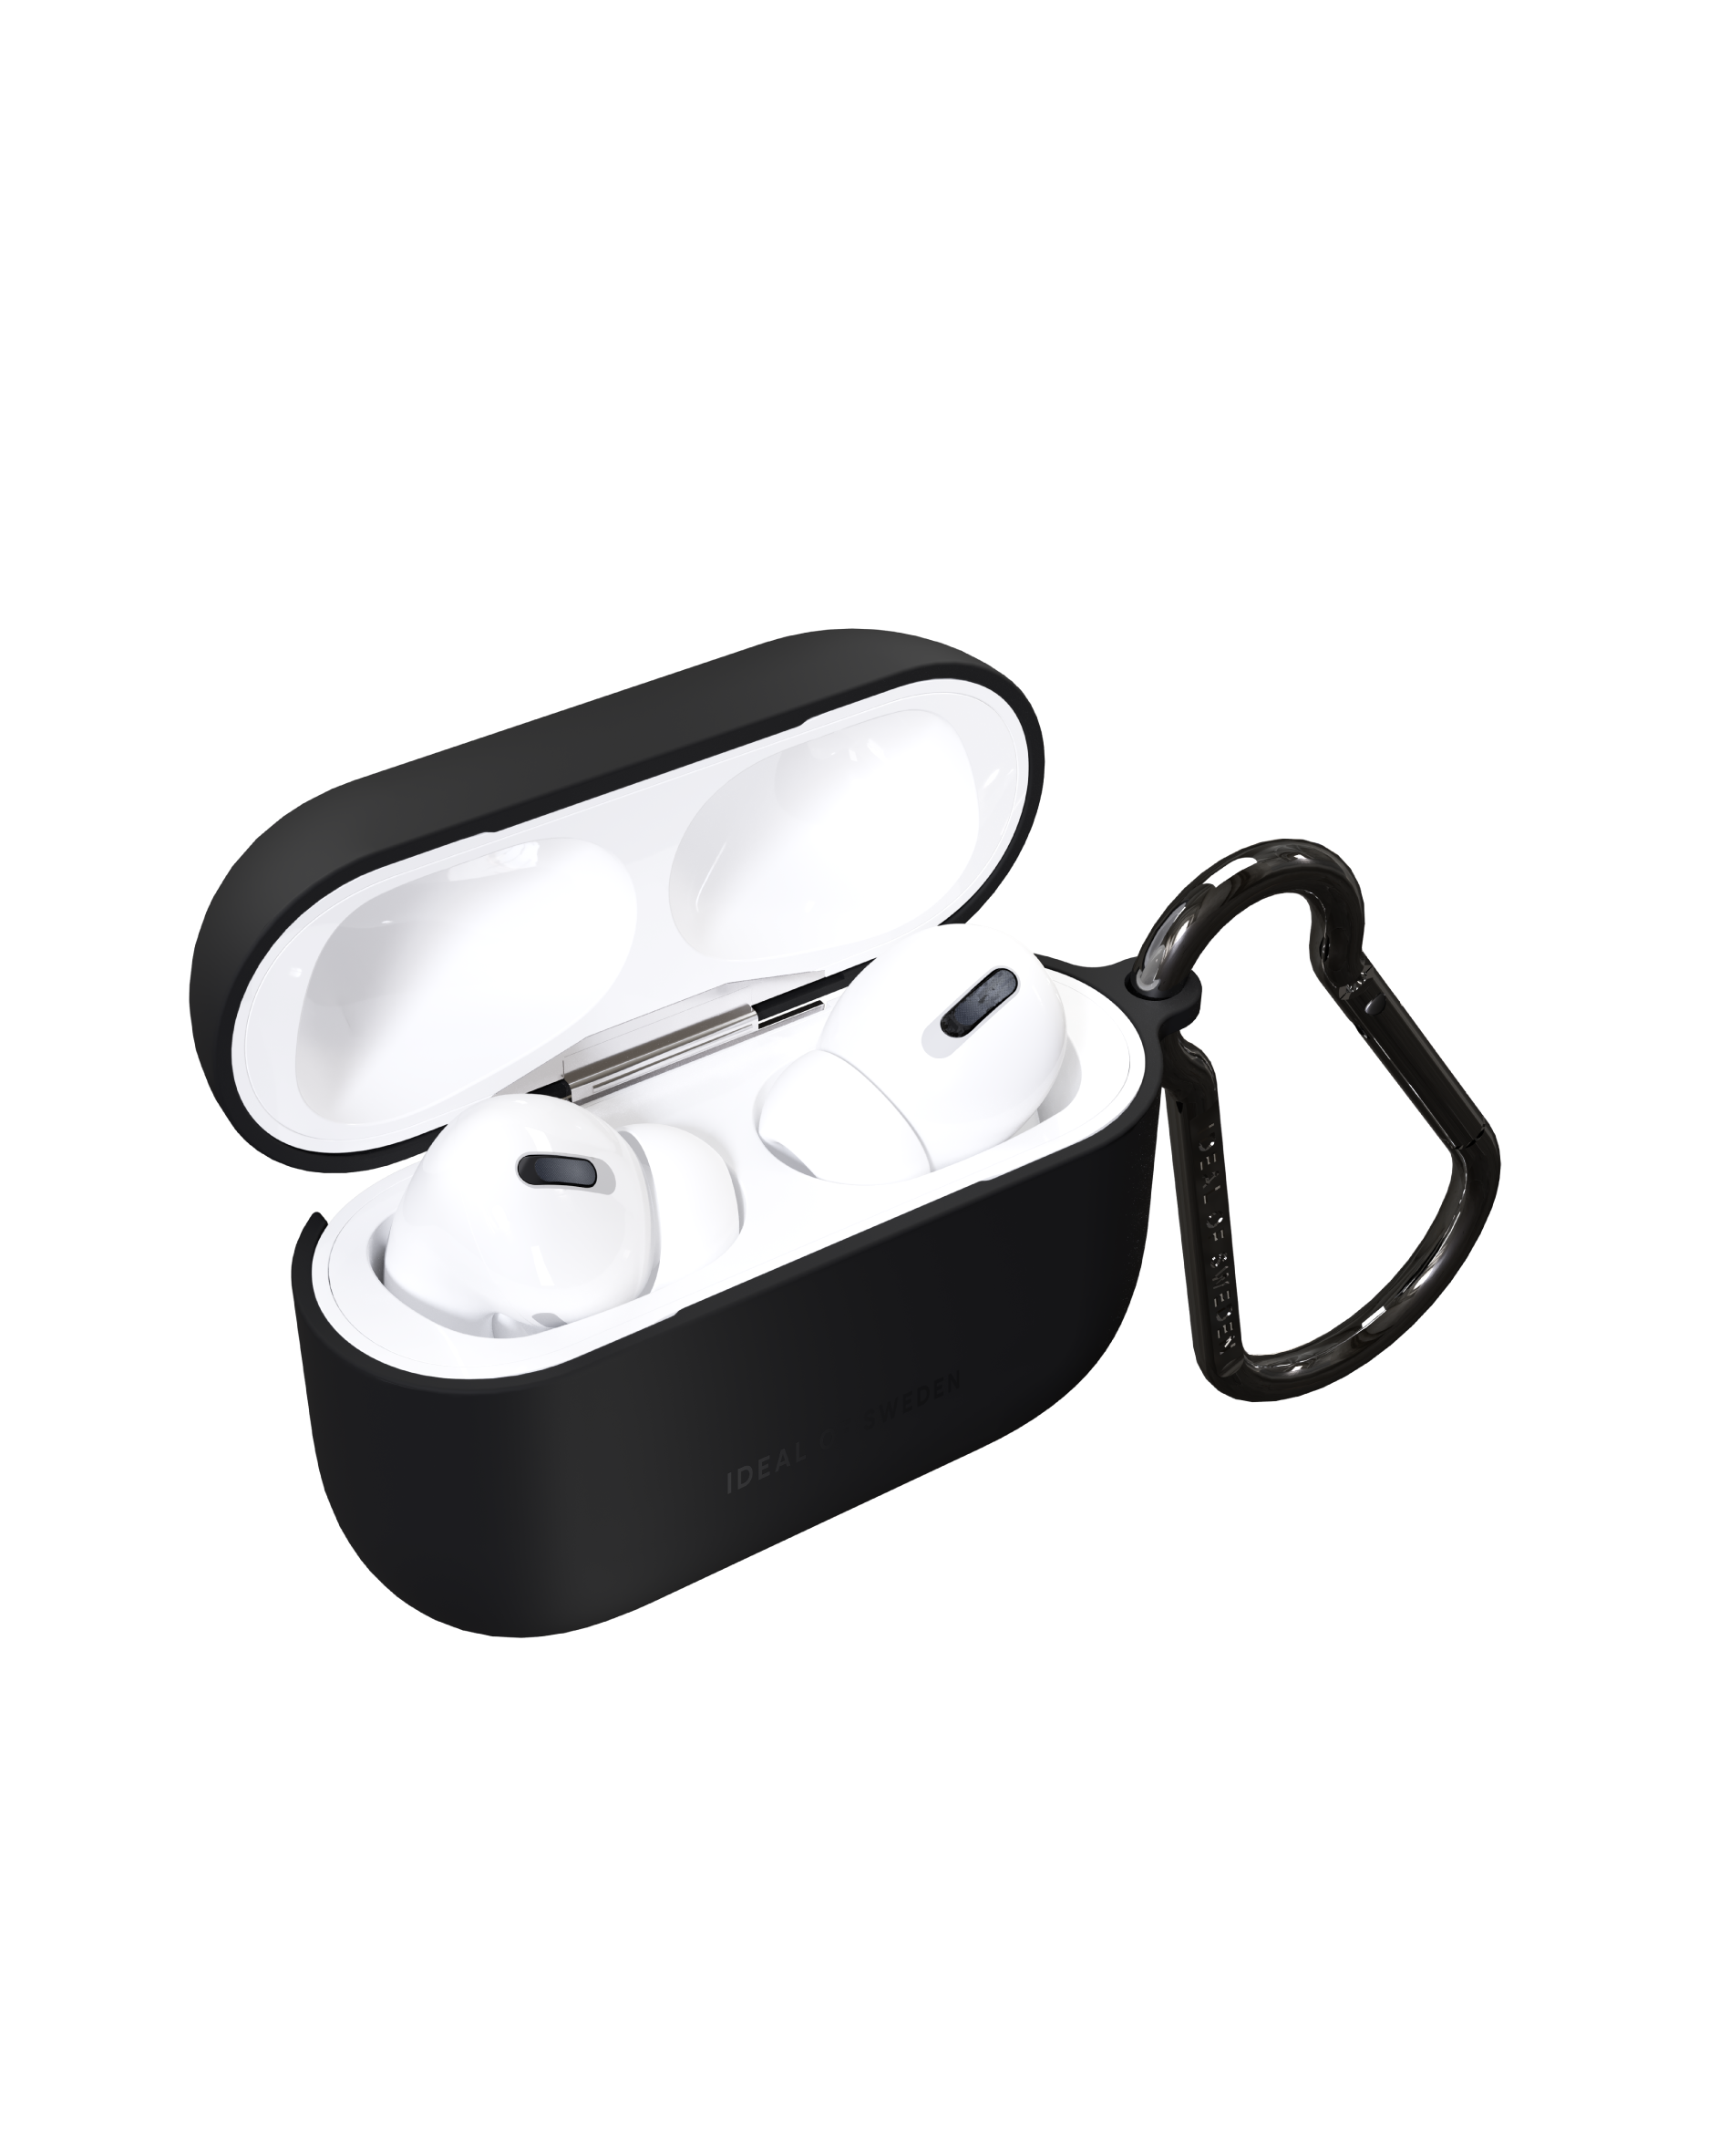 IDEAL OF SWEDEN Full Dynamic für: IDAPCAS22-PRO-296 AirPod passend Case Black Apple Cover